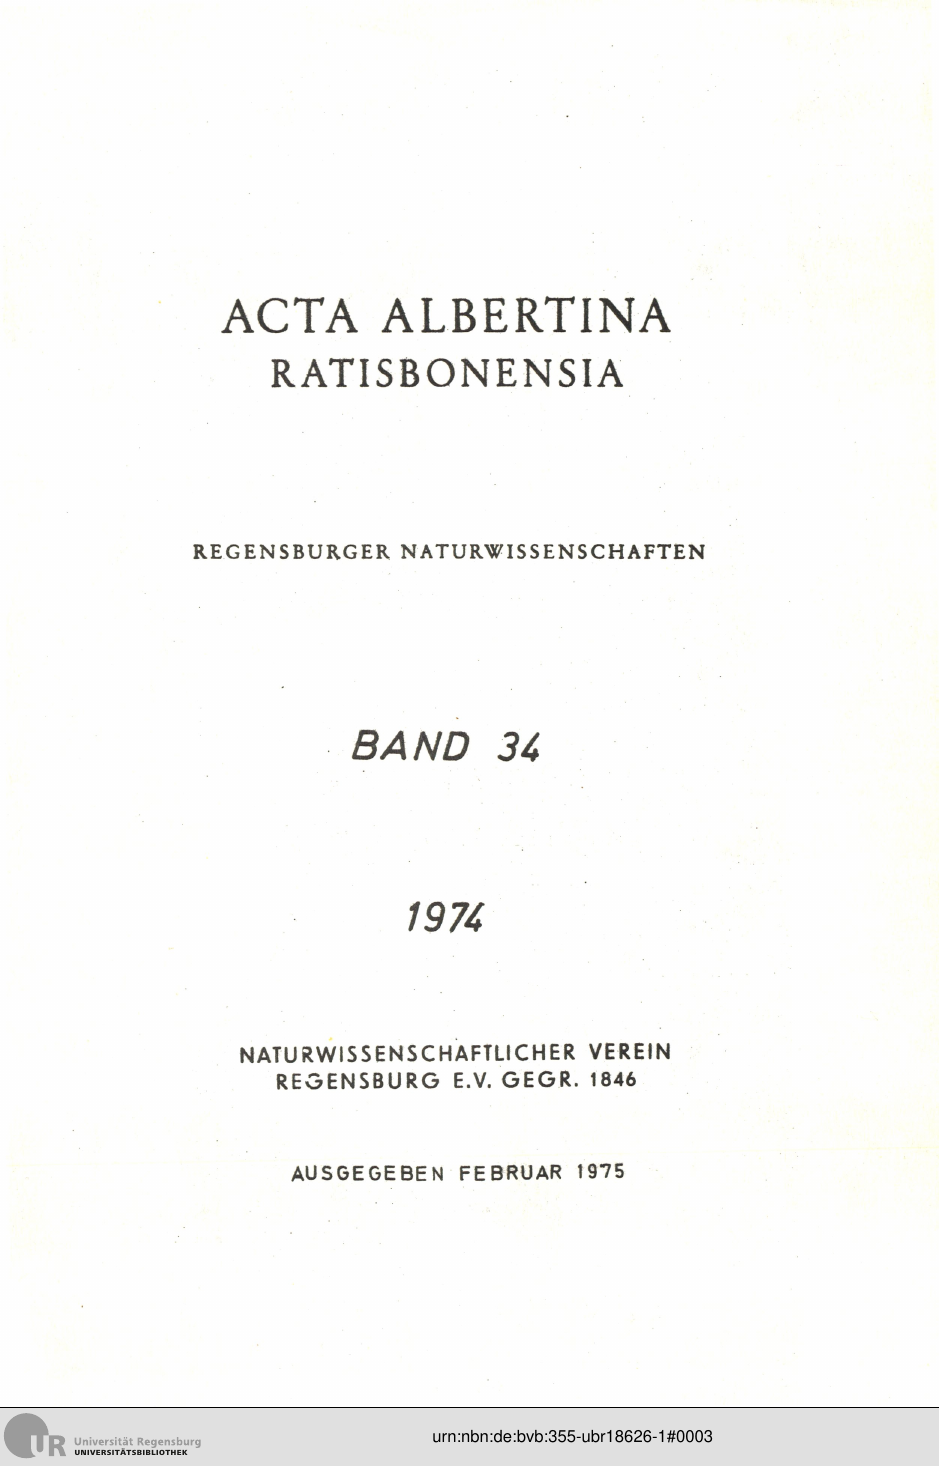 					Ansehen Bd. 34 (1974): Acta Albertina Ratisbonensia
				